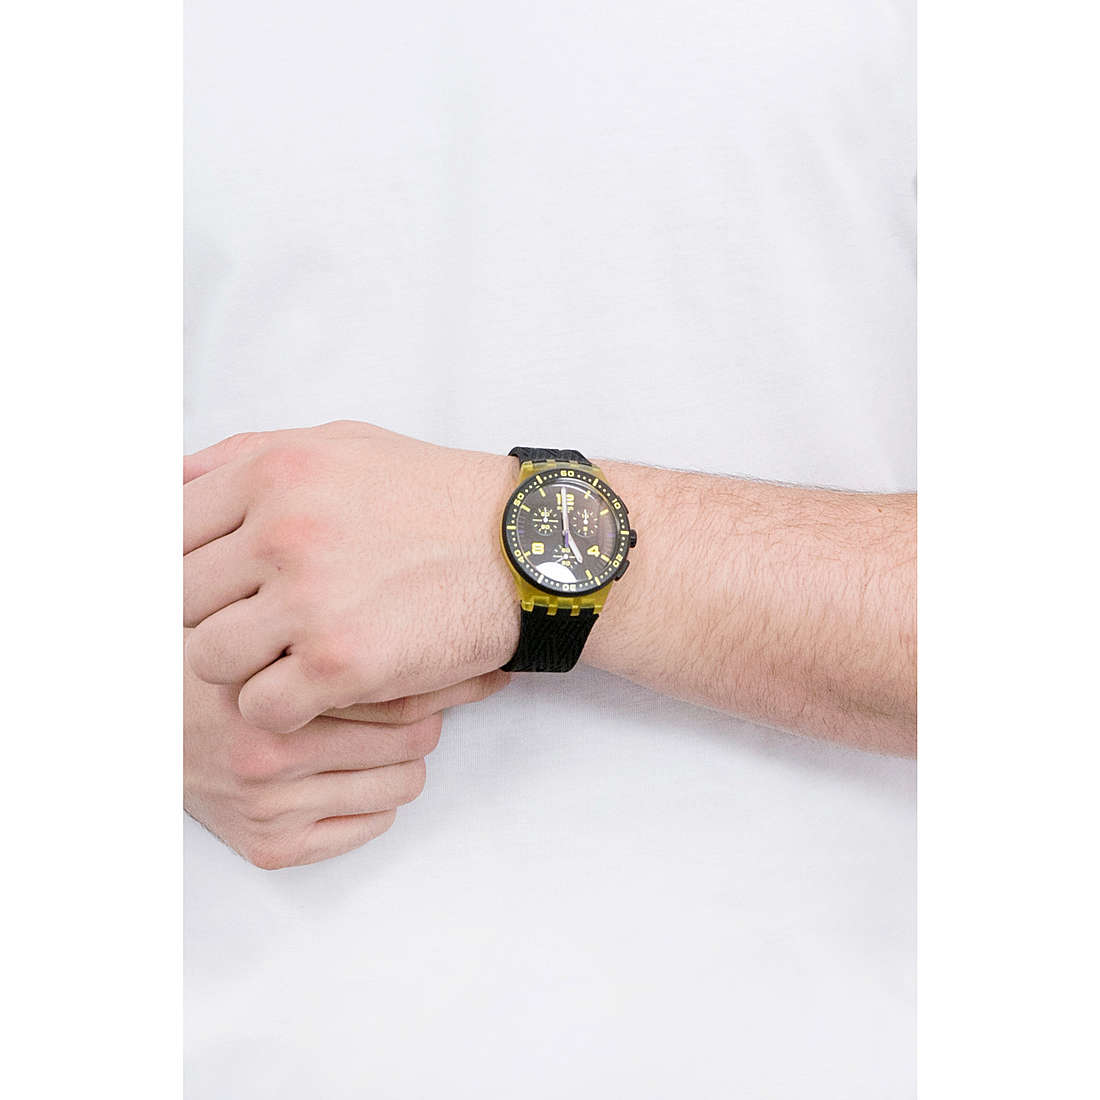 Swatch chronographes Essentials homme SUSJ403 Je porte